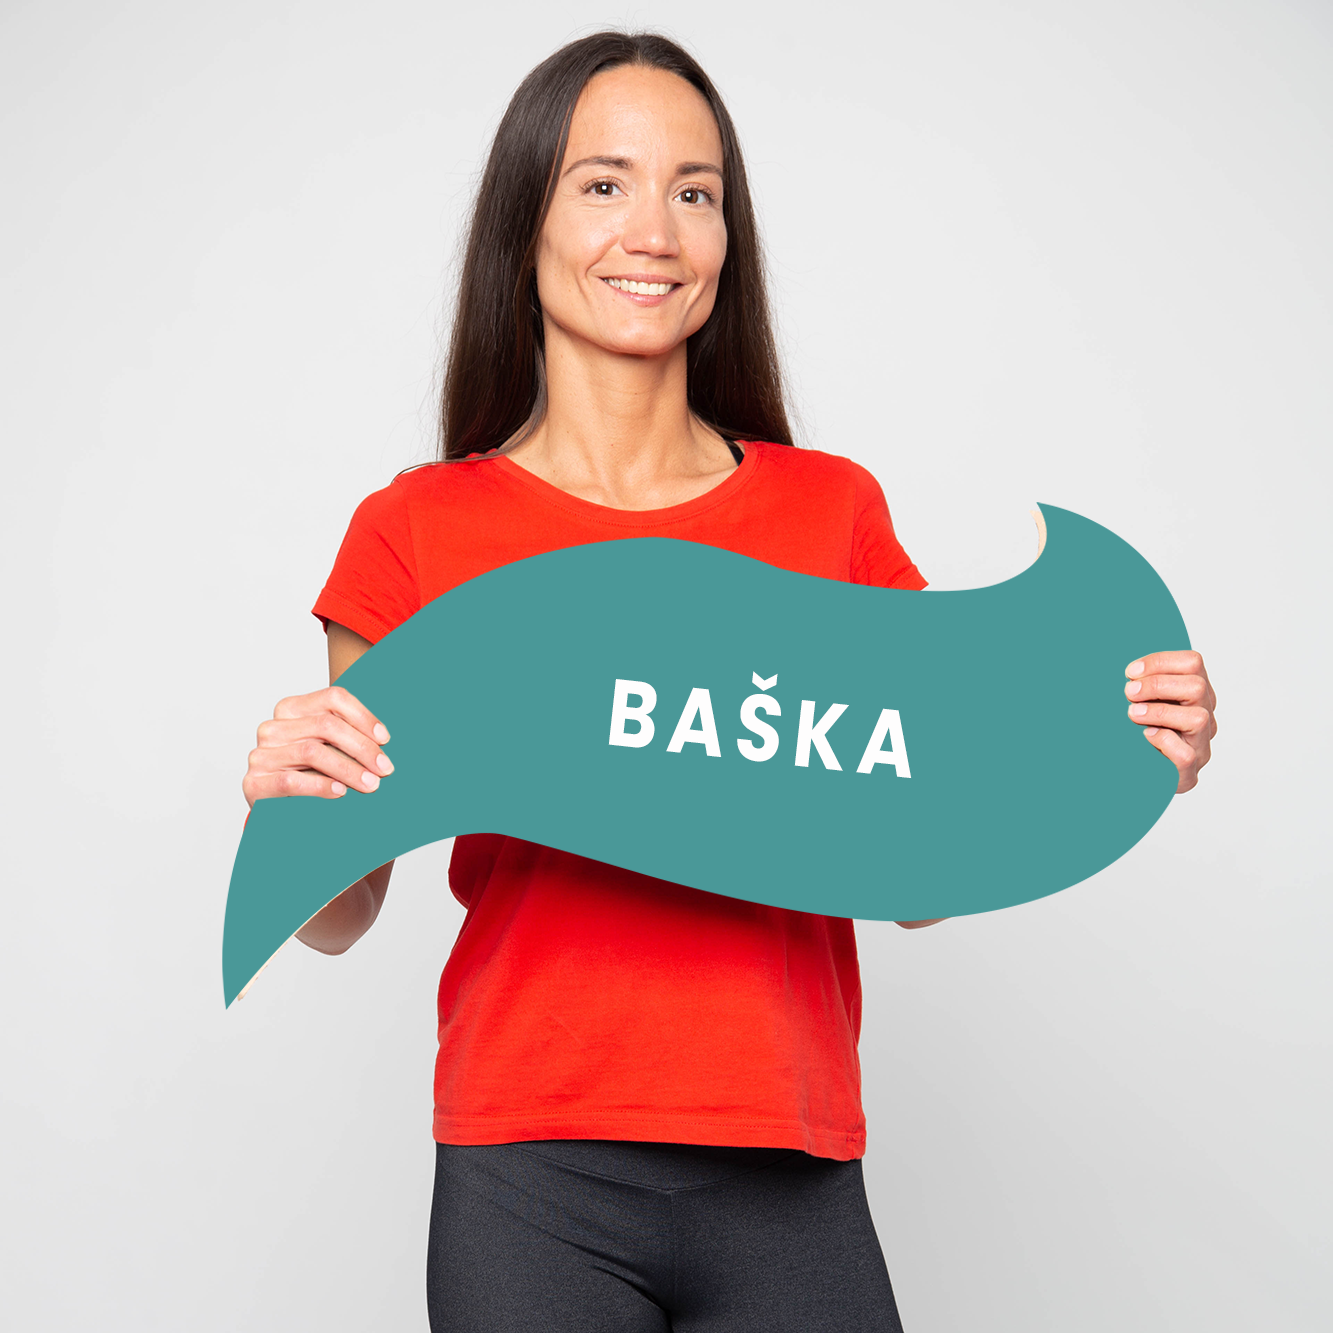 Baska_baska